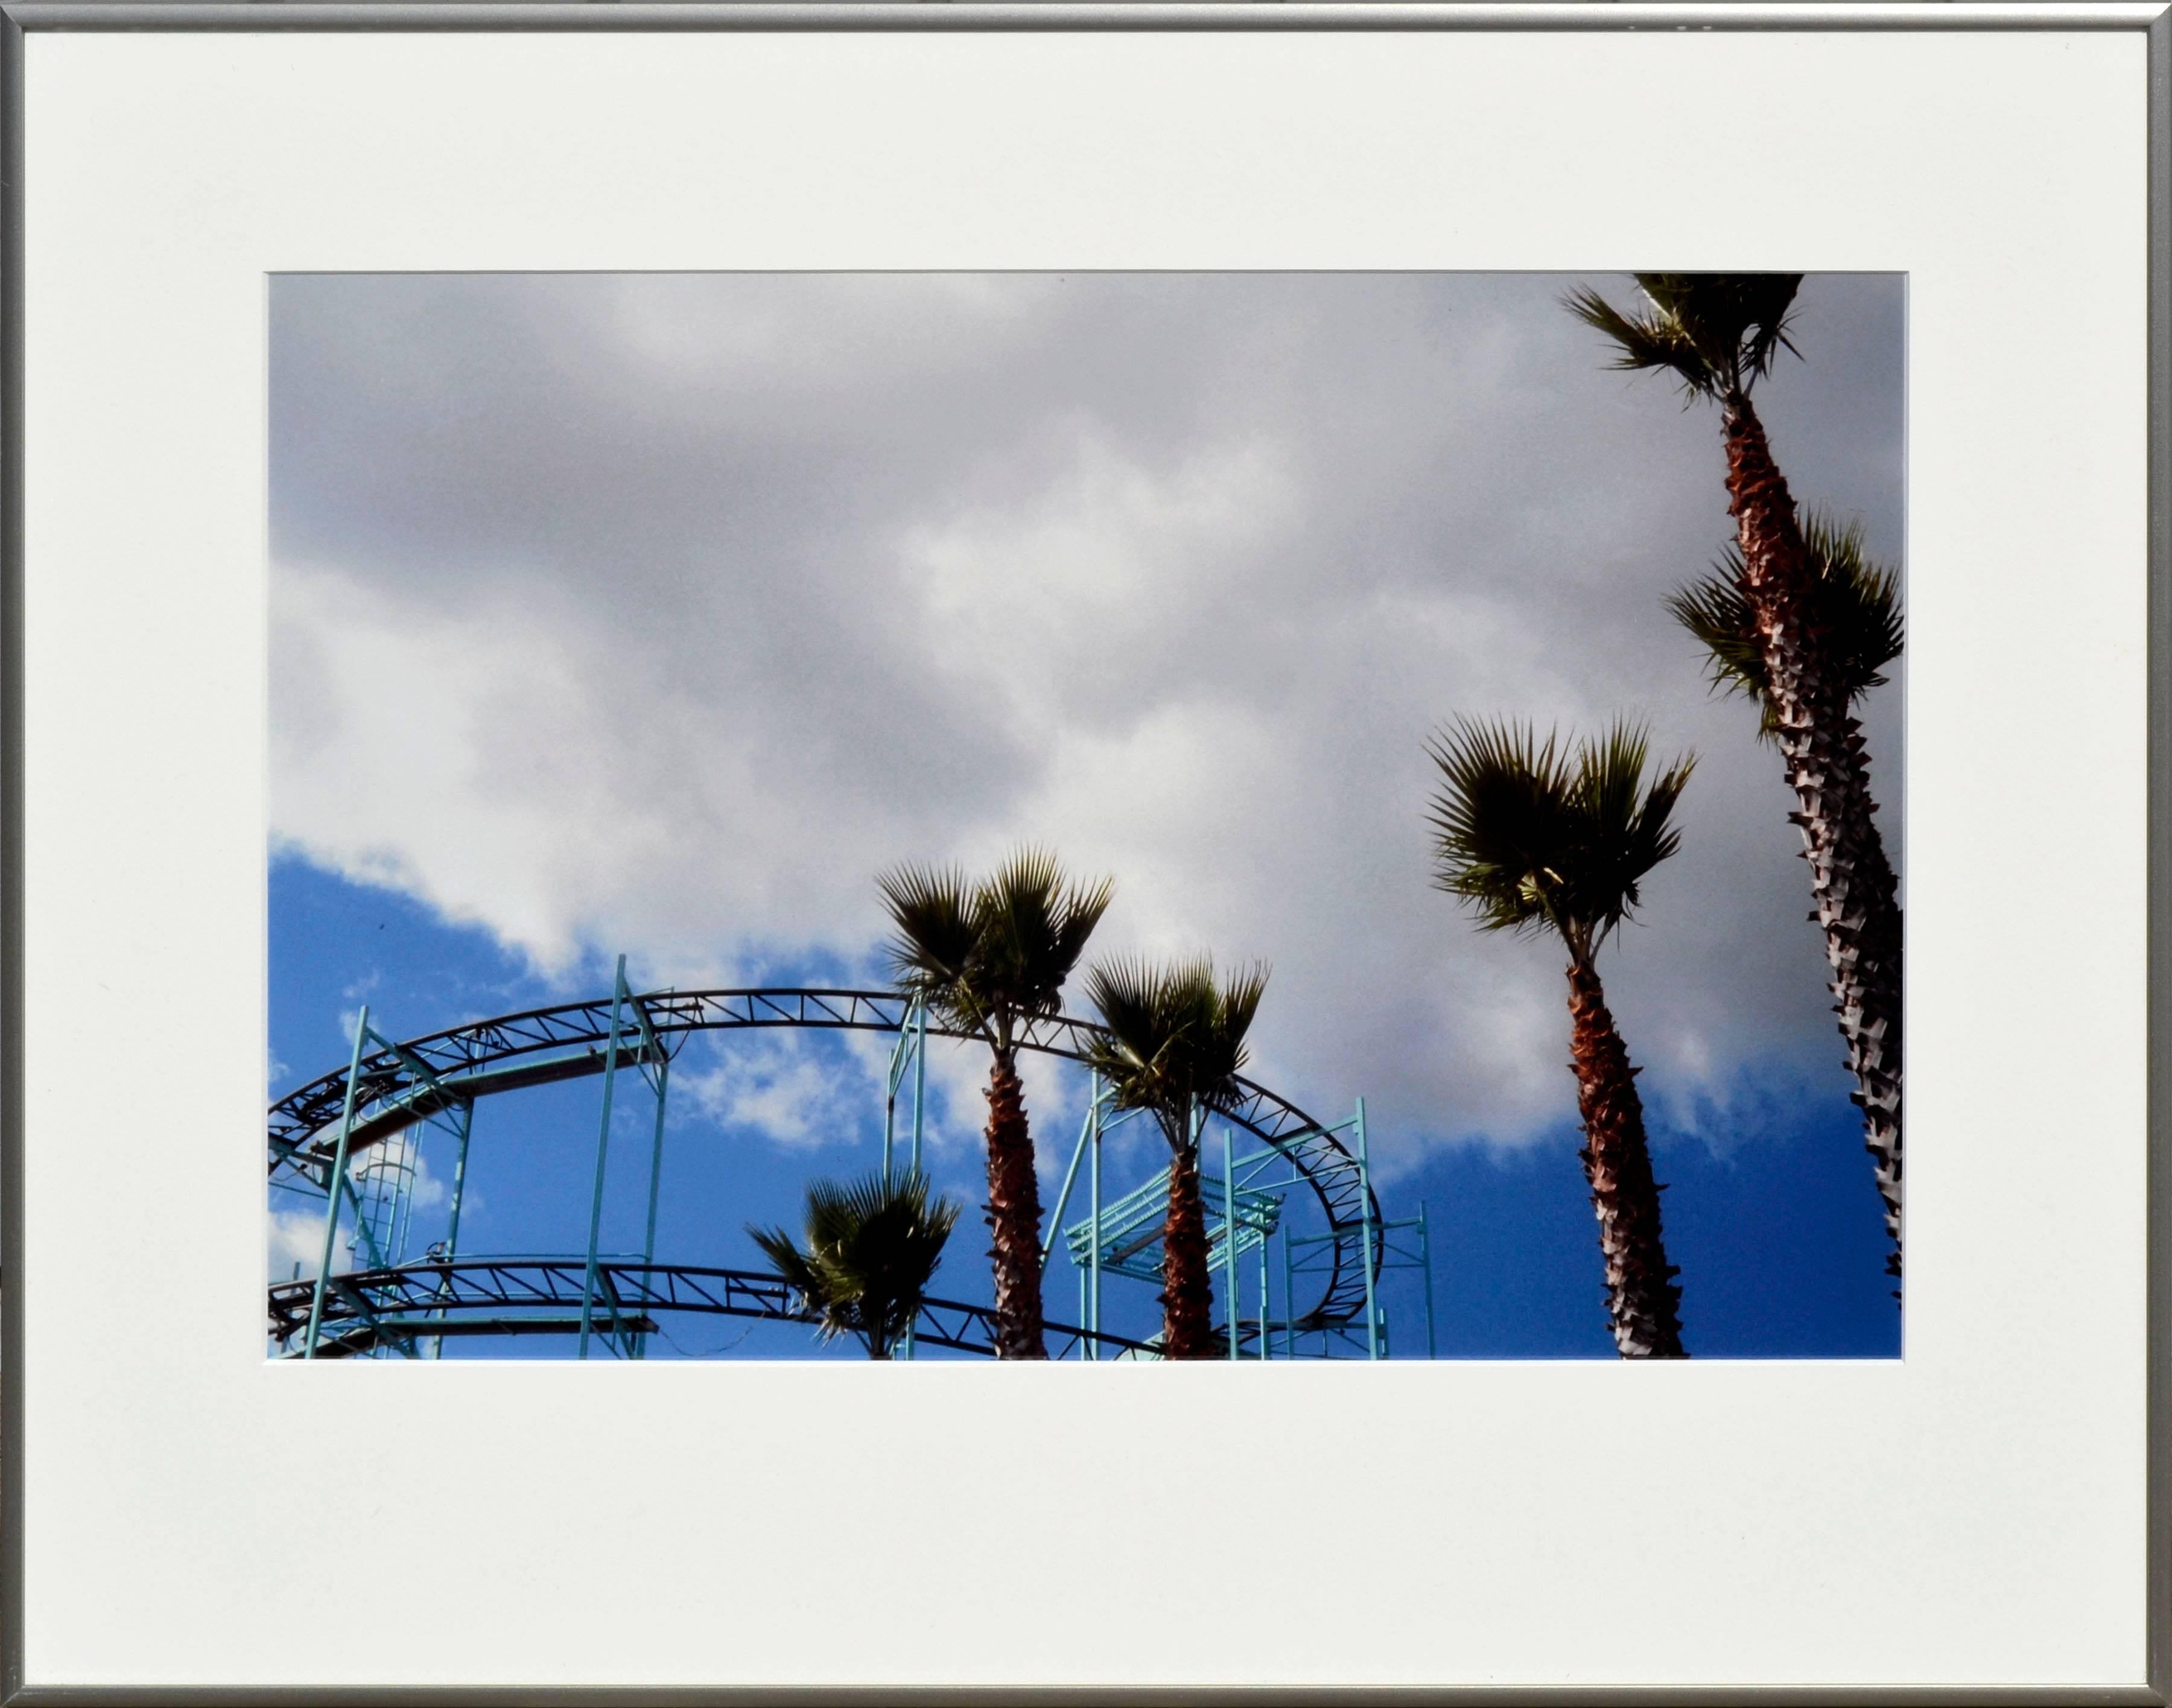 The Palms at the Boardwalk - Santa Cruz Beach Boardwalk Color Photograph 